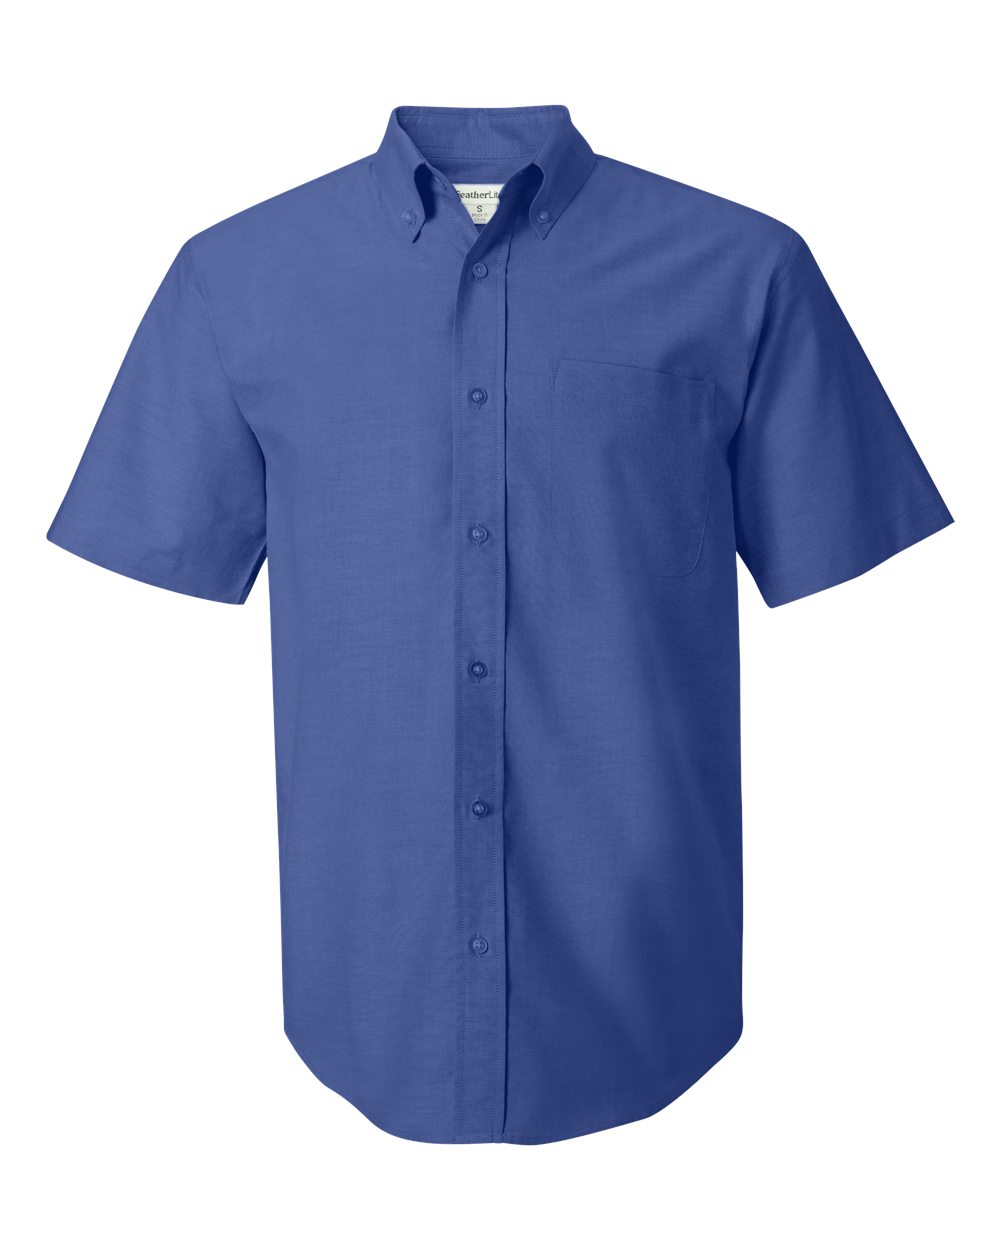 FeatherLite 0231 Short Sleeve Oxford Shirt